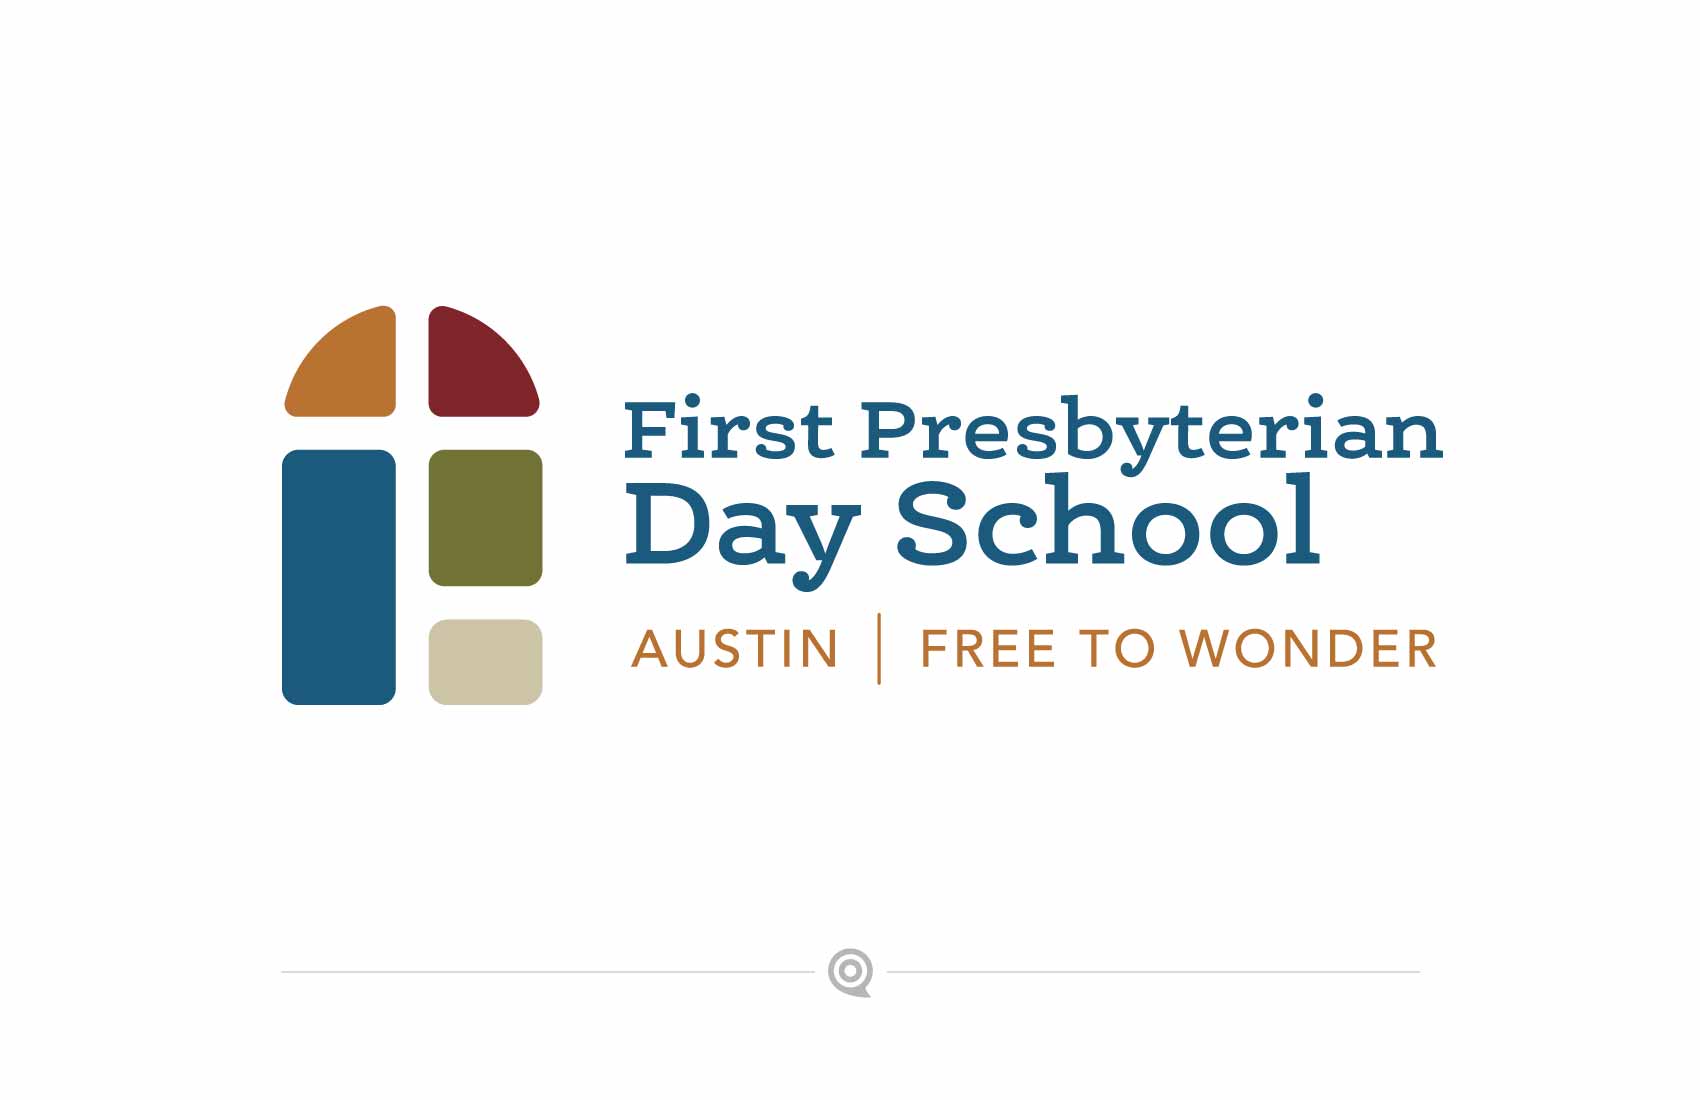 First Presbyterian Day School Austin | Free to Wonder